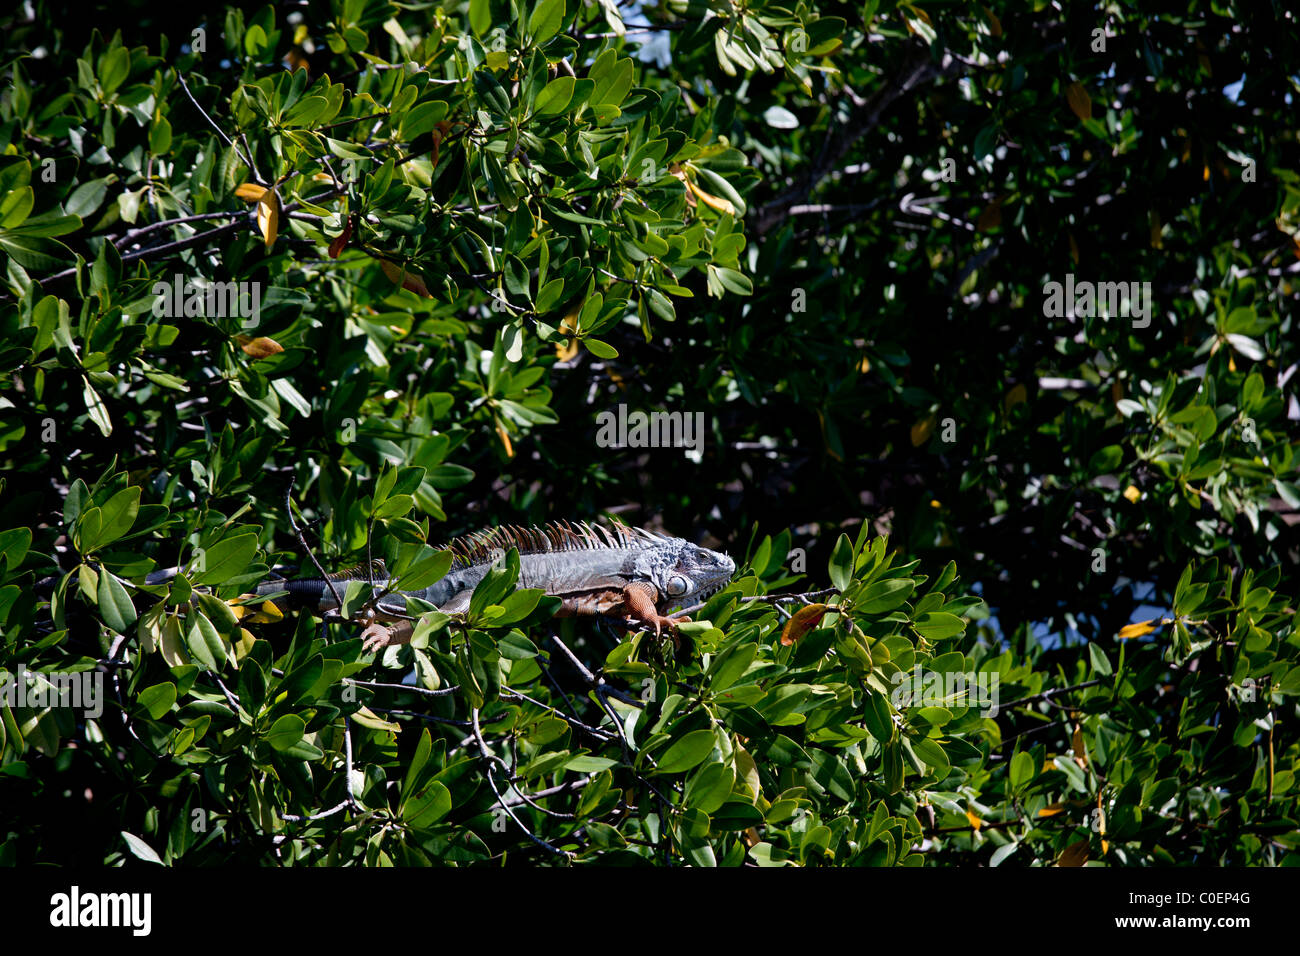 Green Iguana resting on mangroves Stock Photo